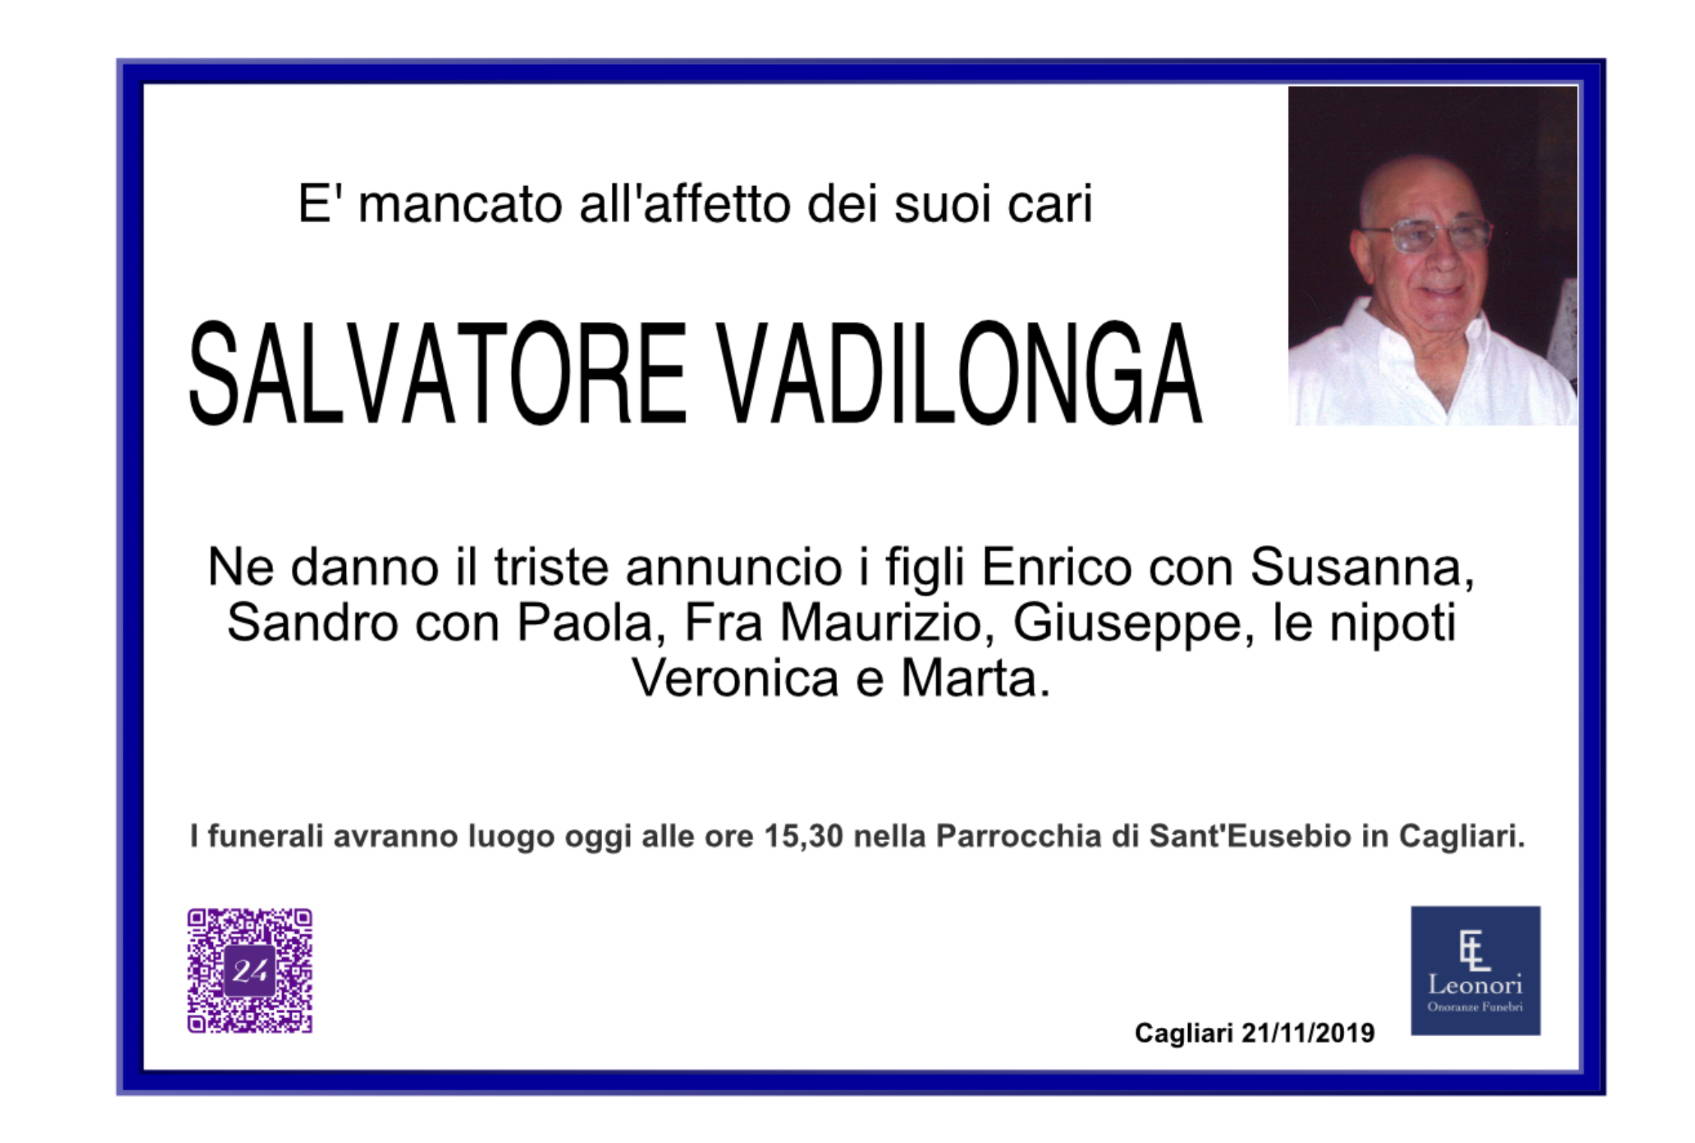 Salvatore Vadilonga